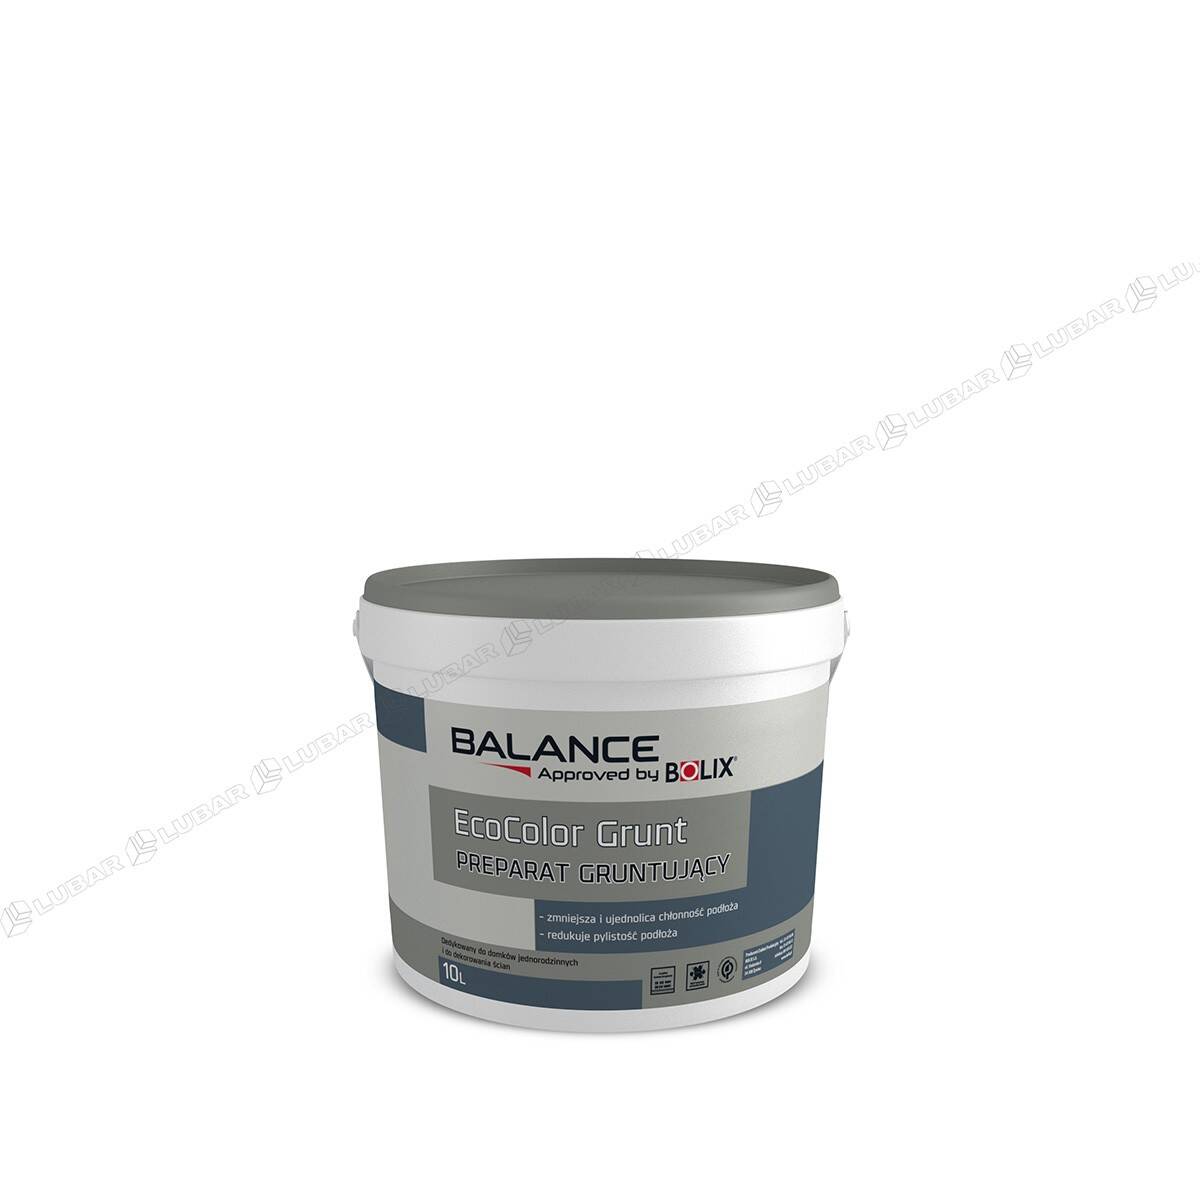 BOLIX Balance EcoColor Grunt Preparat gruntujący pod farby silikonowe 5l